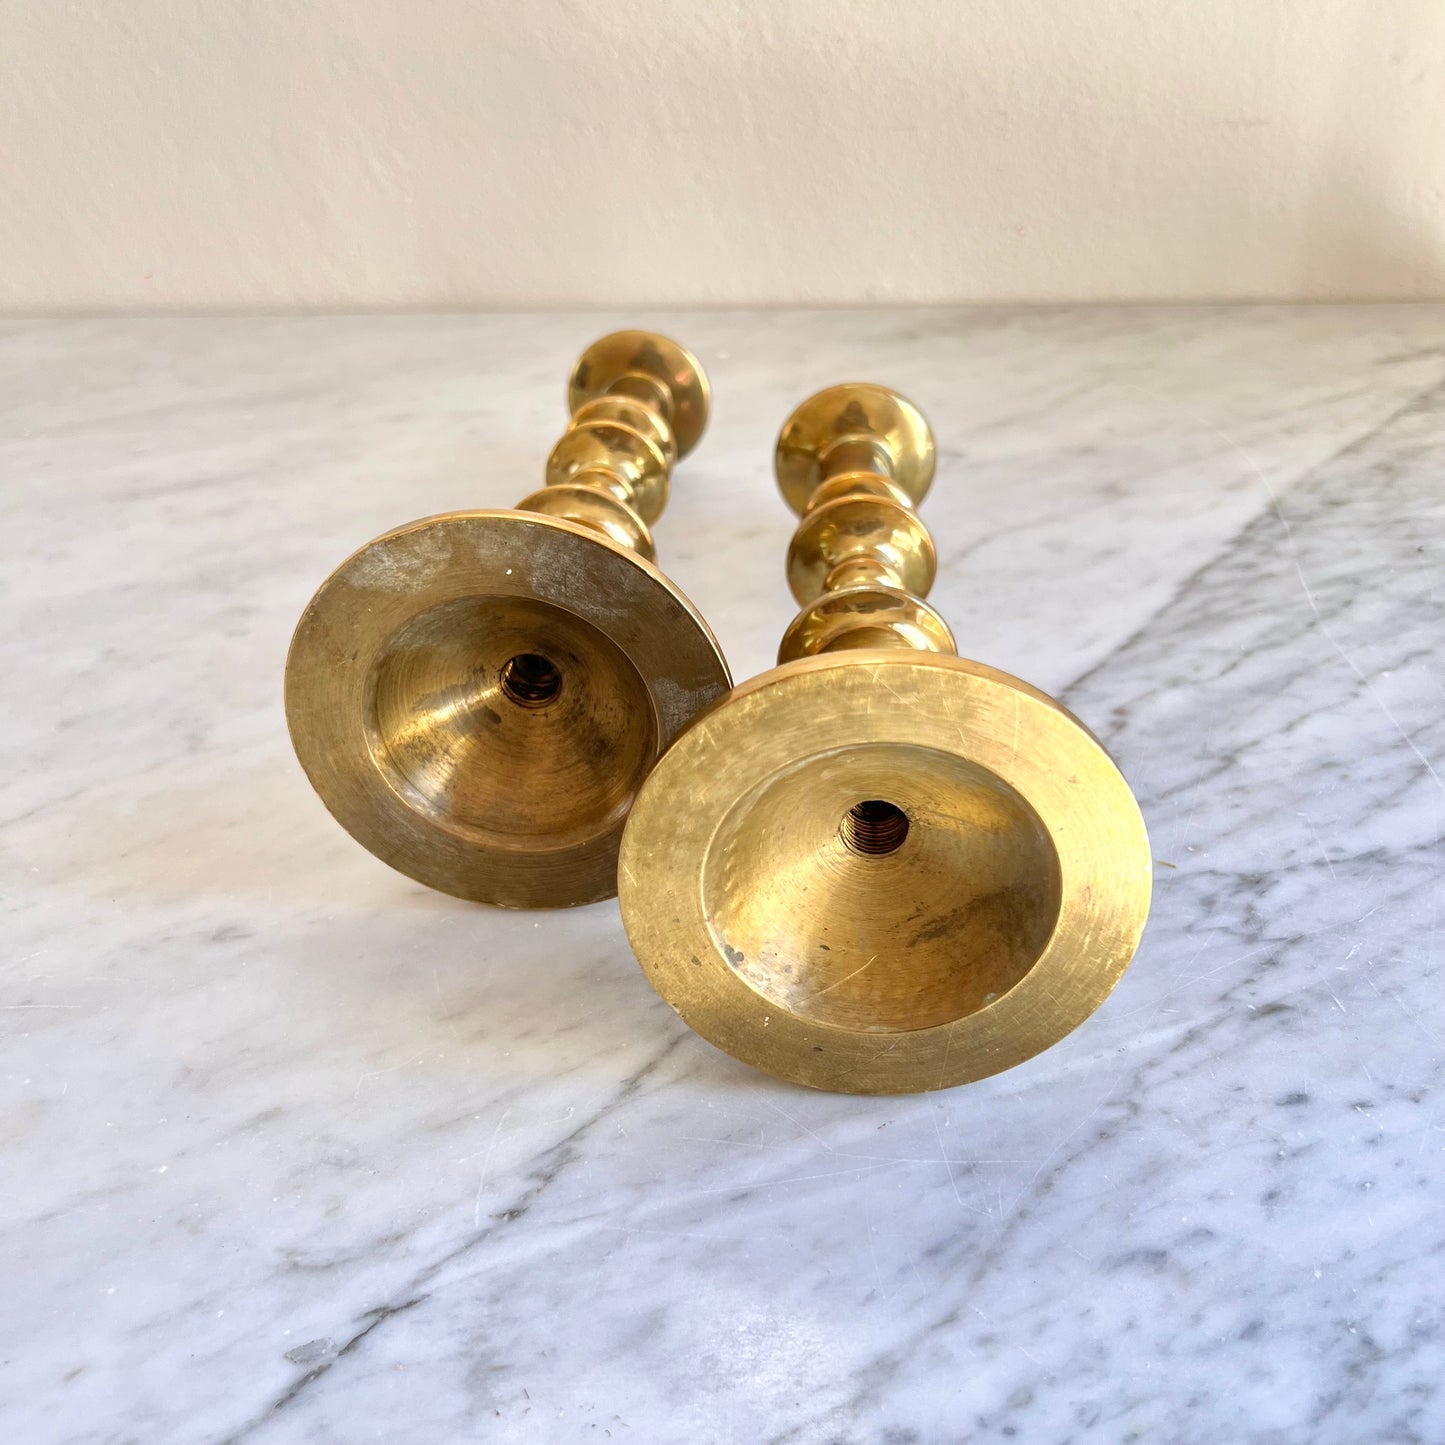 Vintage Brass Candleholders Made in Korea